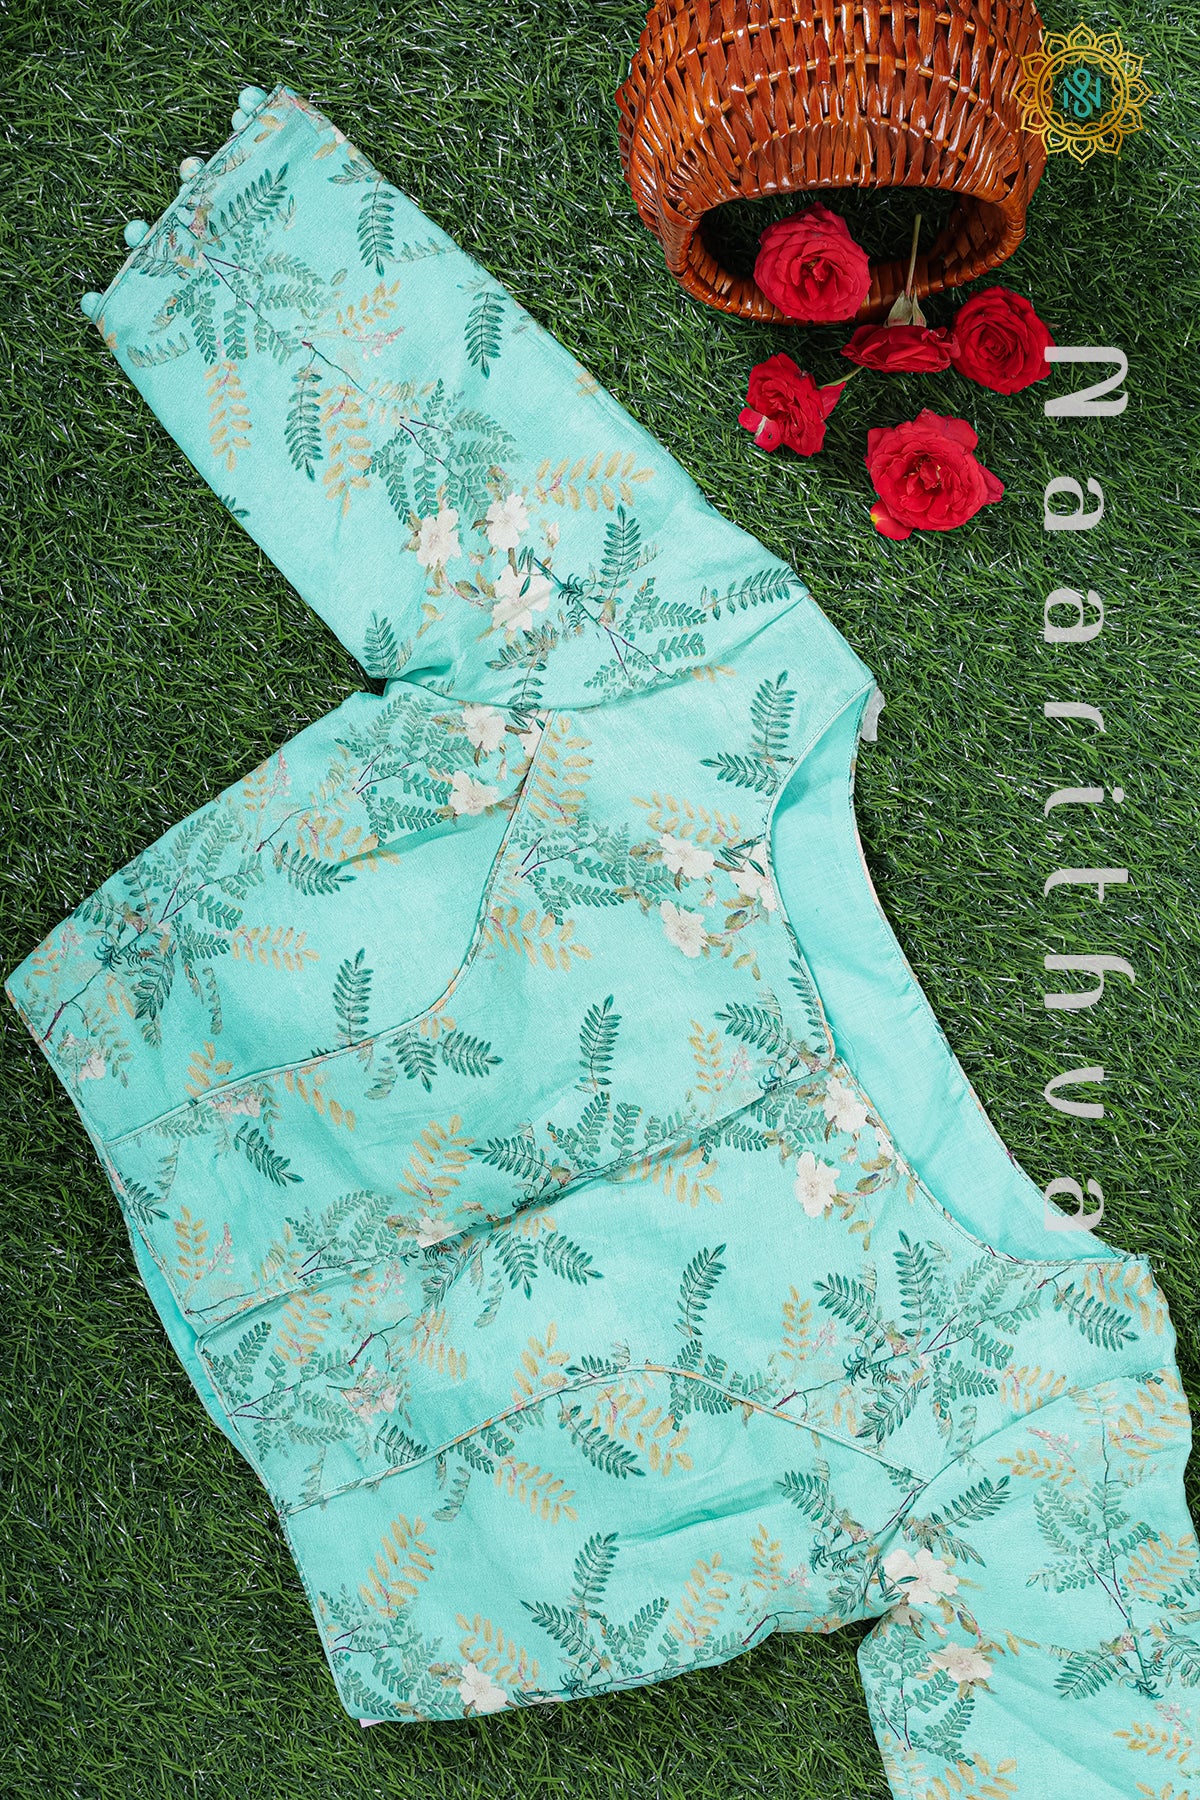 Shop Blouse Back Neck Designs & Patterns Online for Women